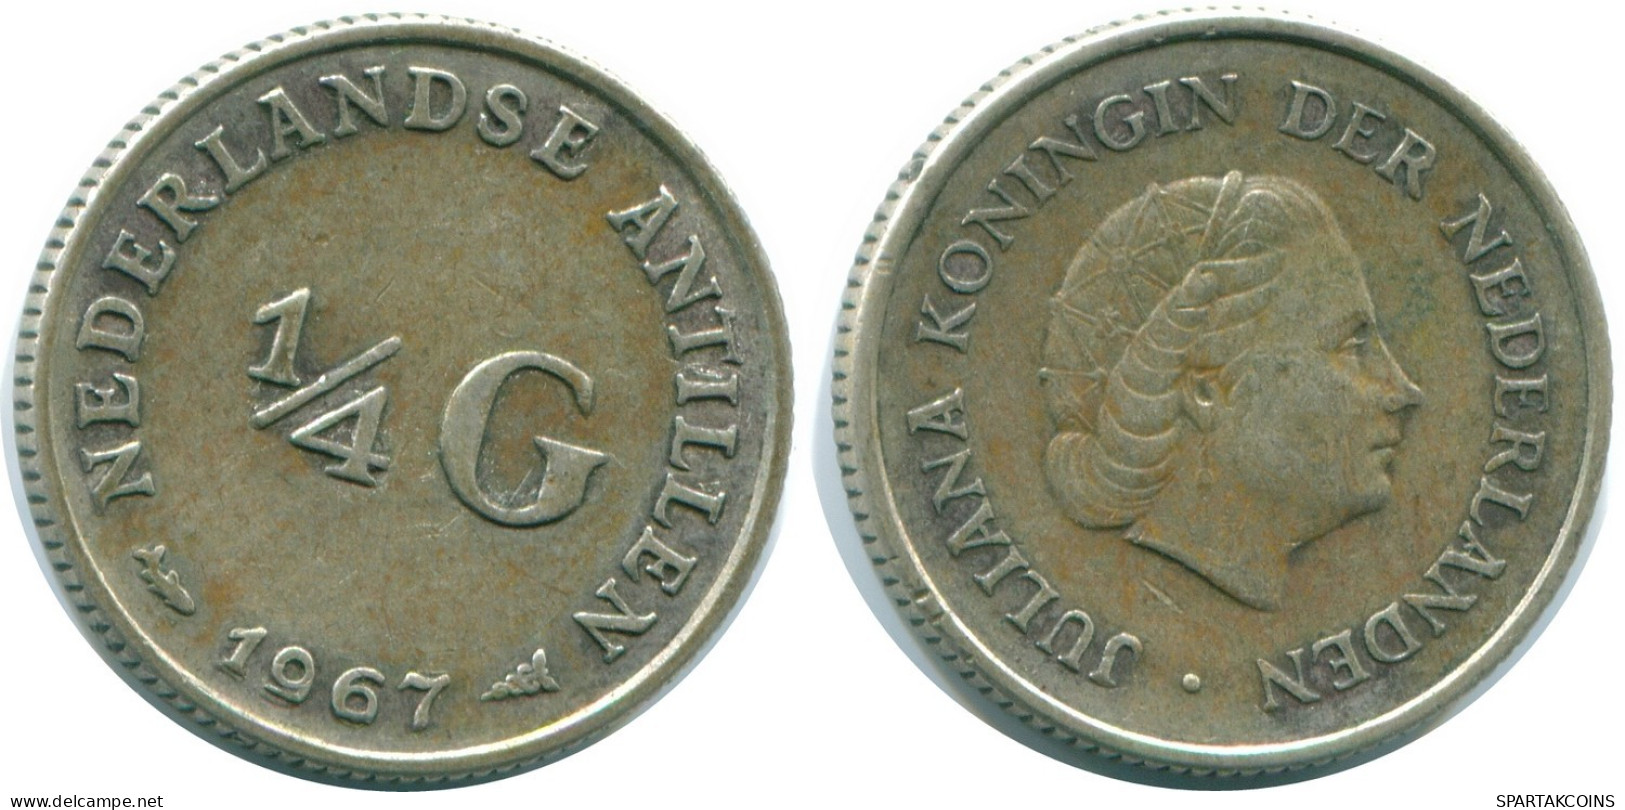 1/4 GULDEN 1967 NETHERLANDS ANTILLES SILVER Colonial Coin #NL11581.4.U.A - Netherlands Antilles